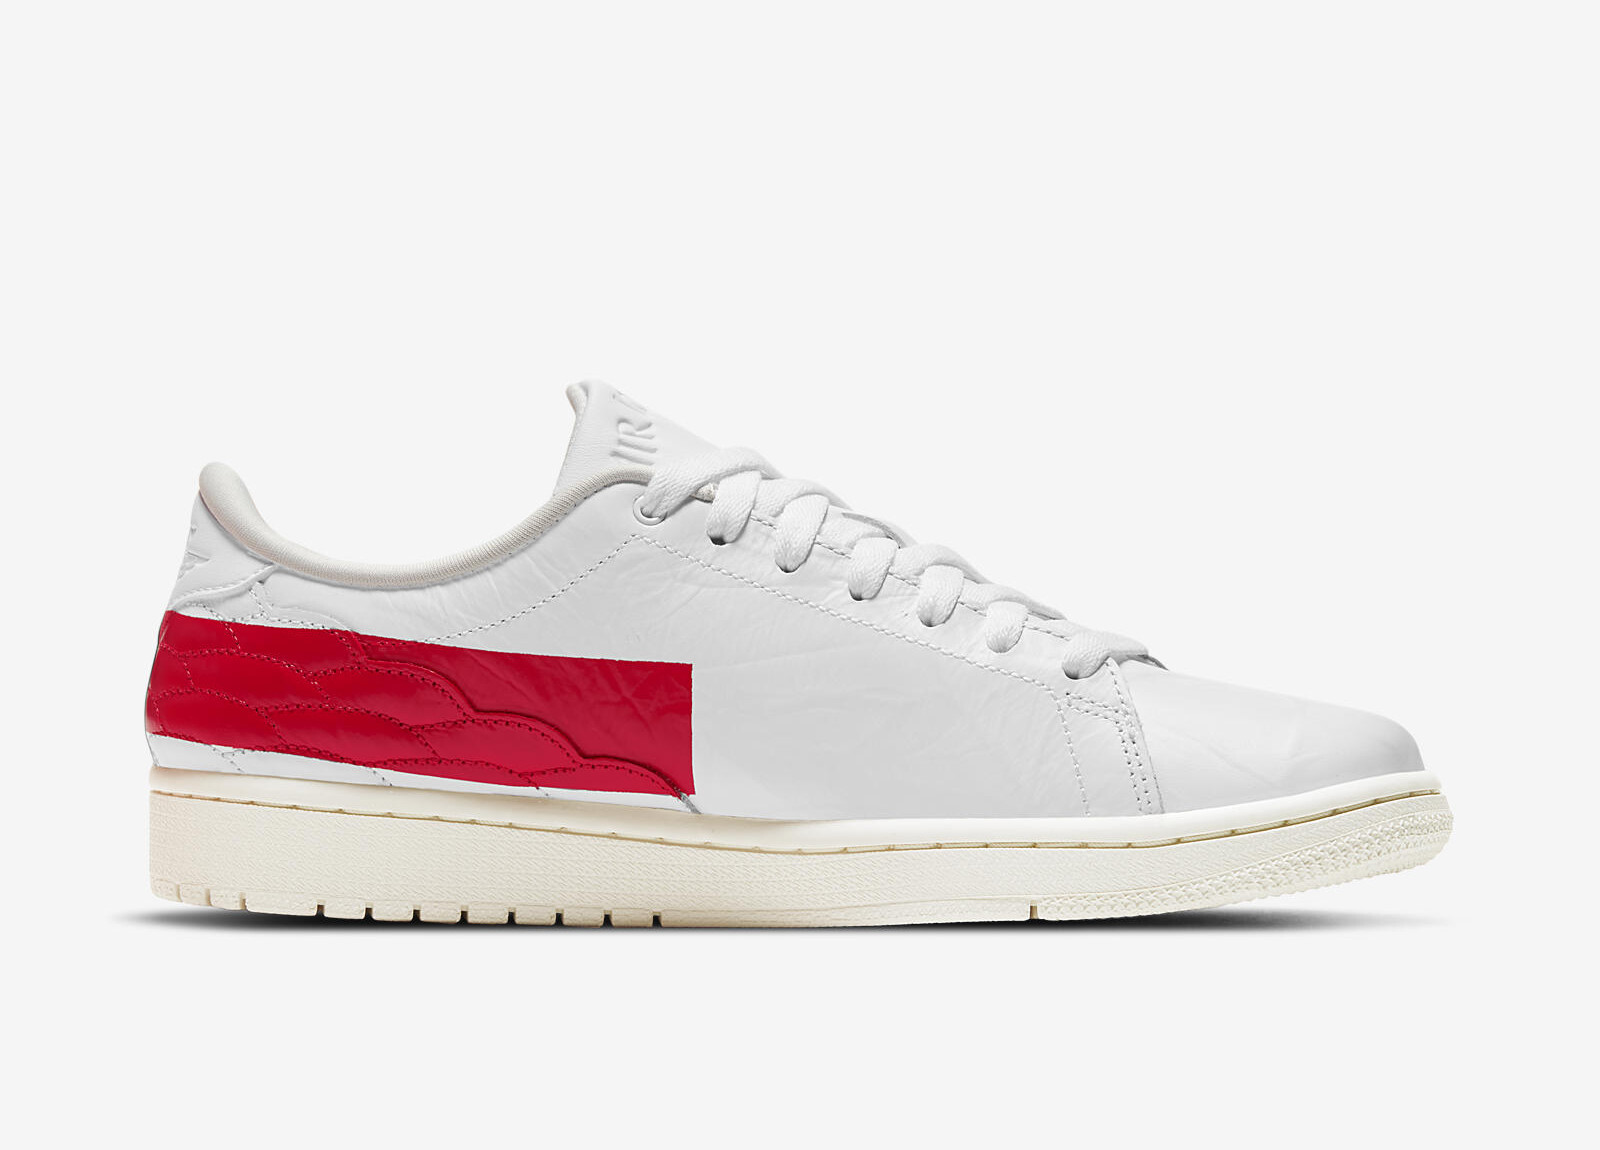 Air Jordan 1 Centre Court
White / Red